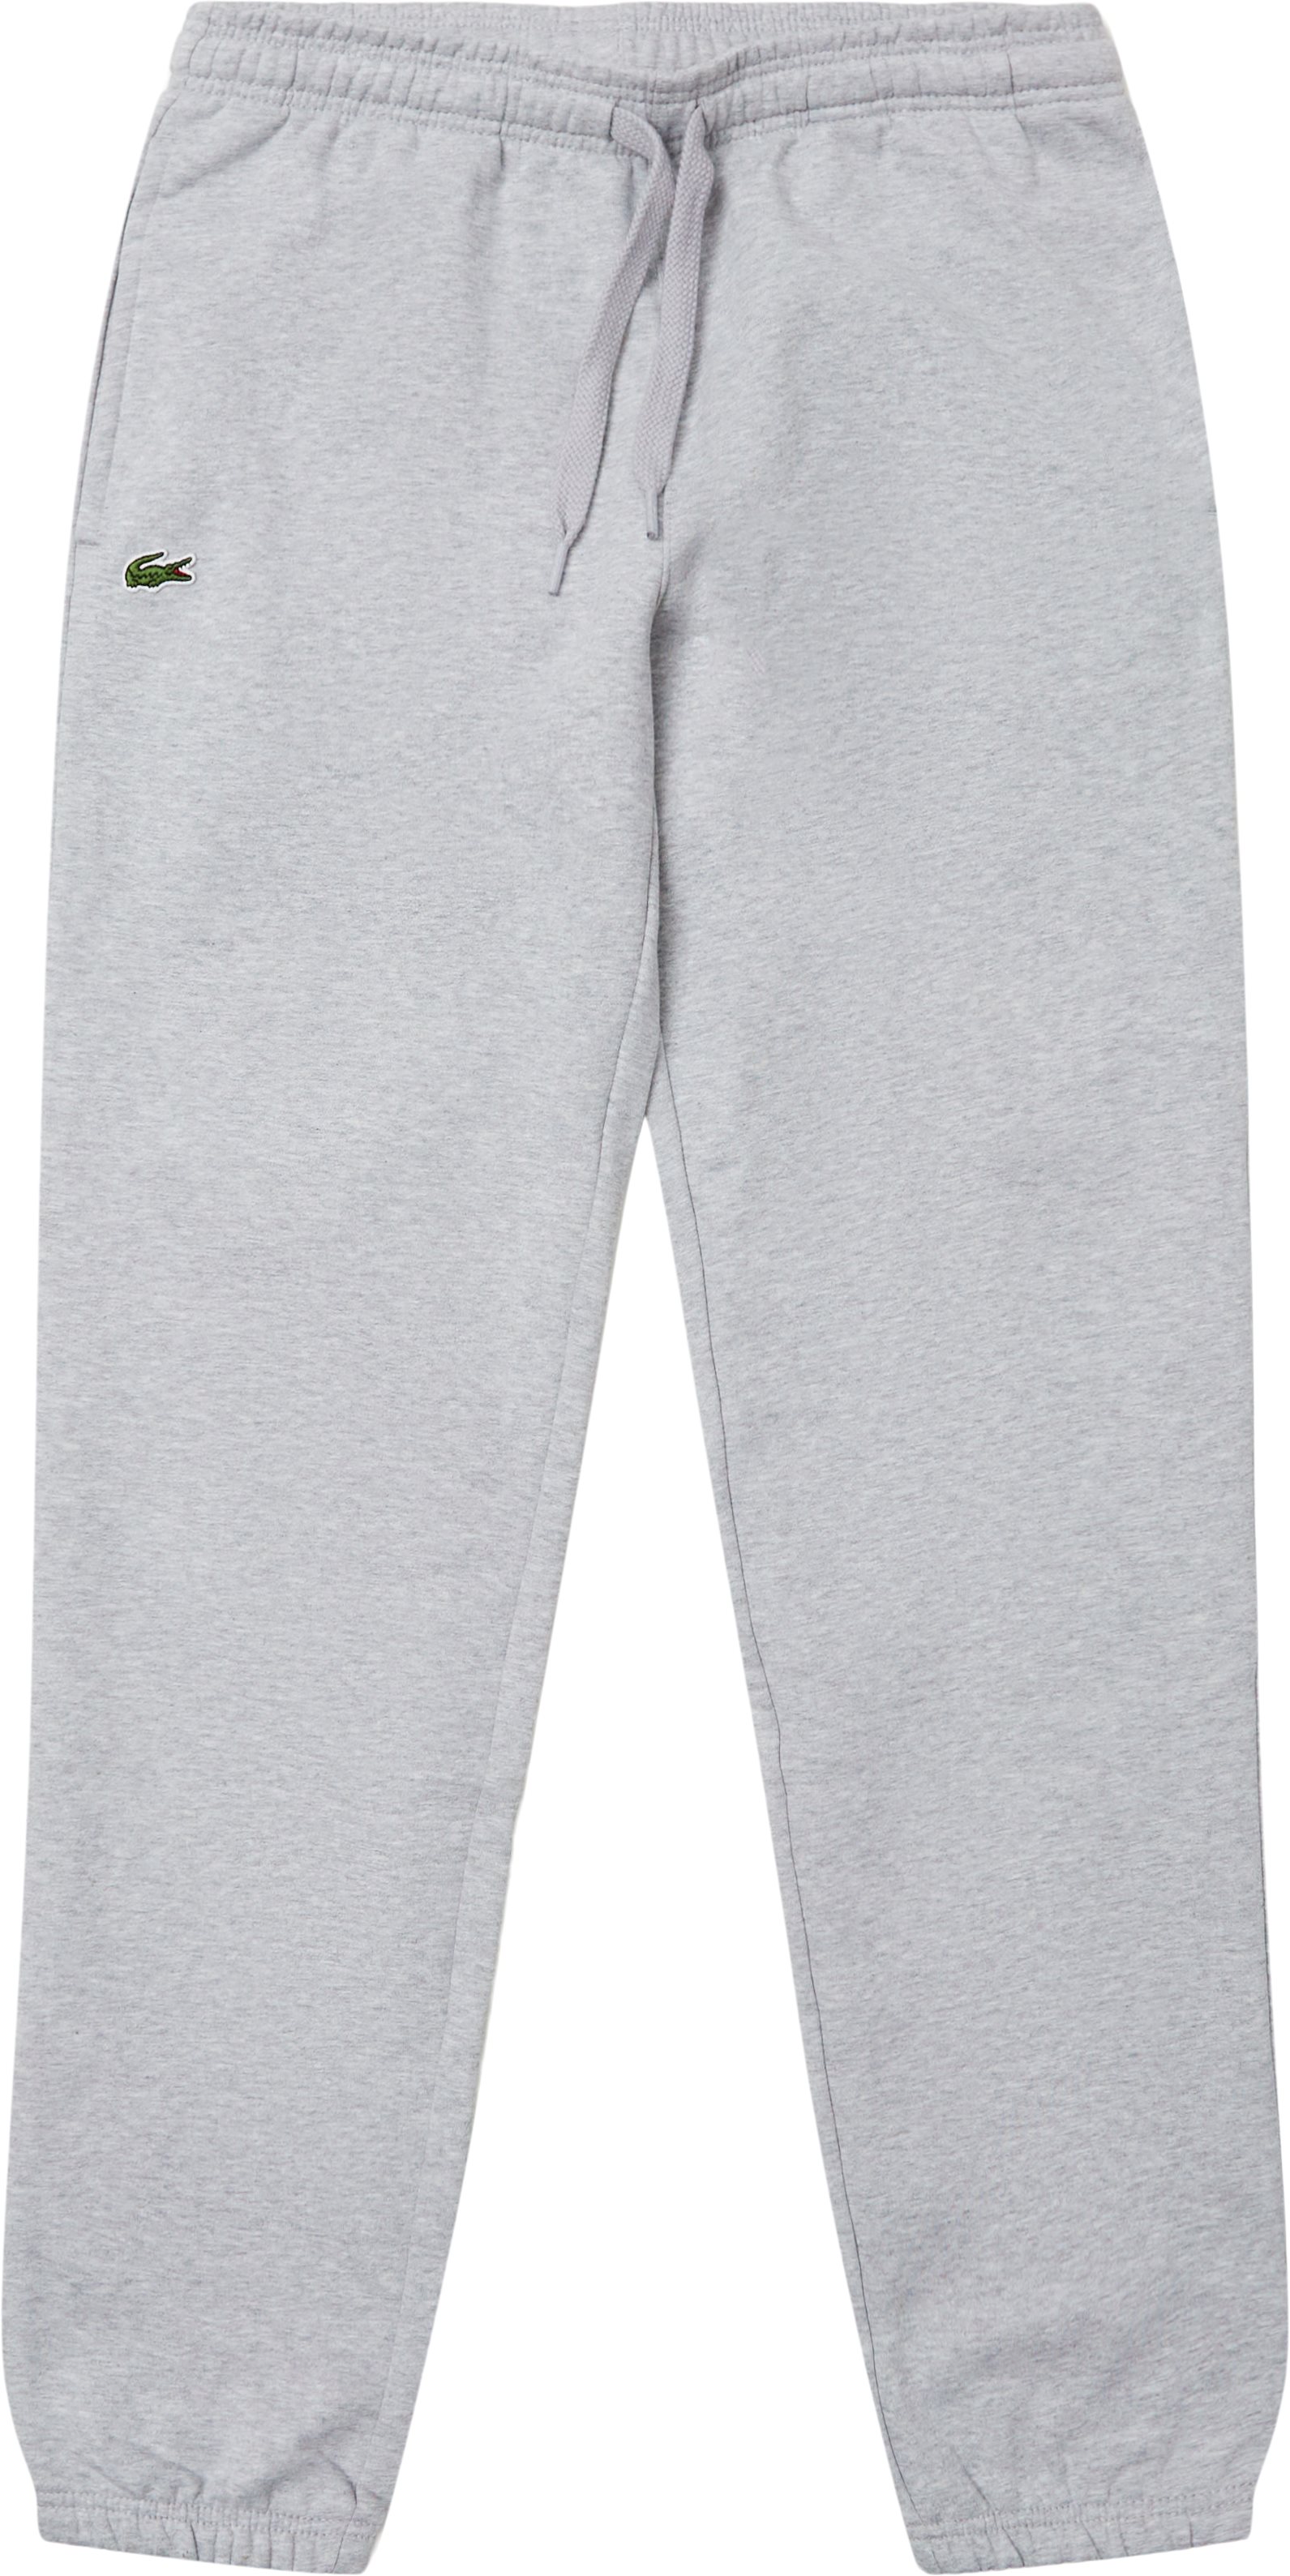 Xh7611 Sweatpants - Trousers - Regular fit - Grey